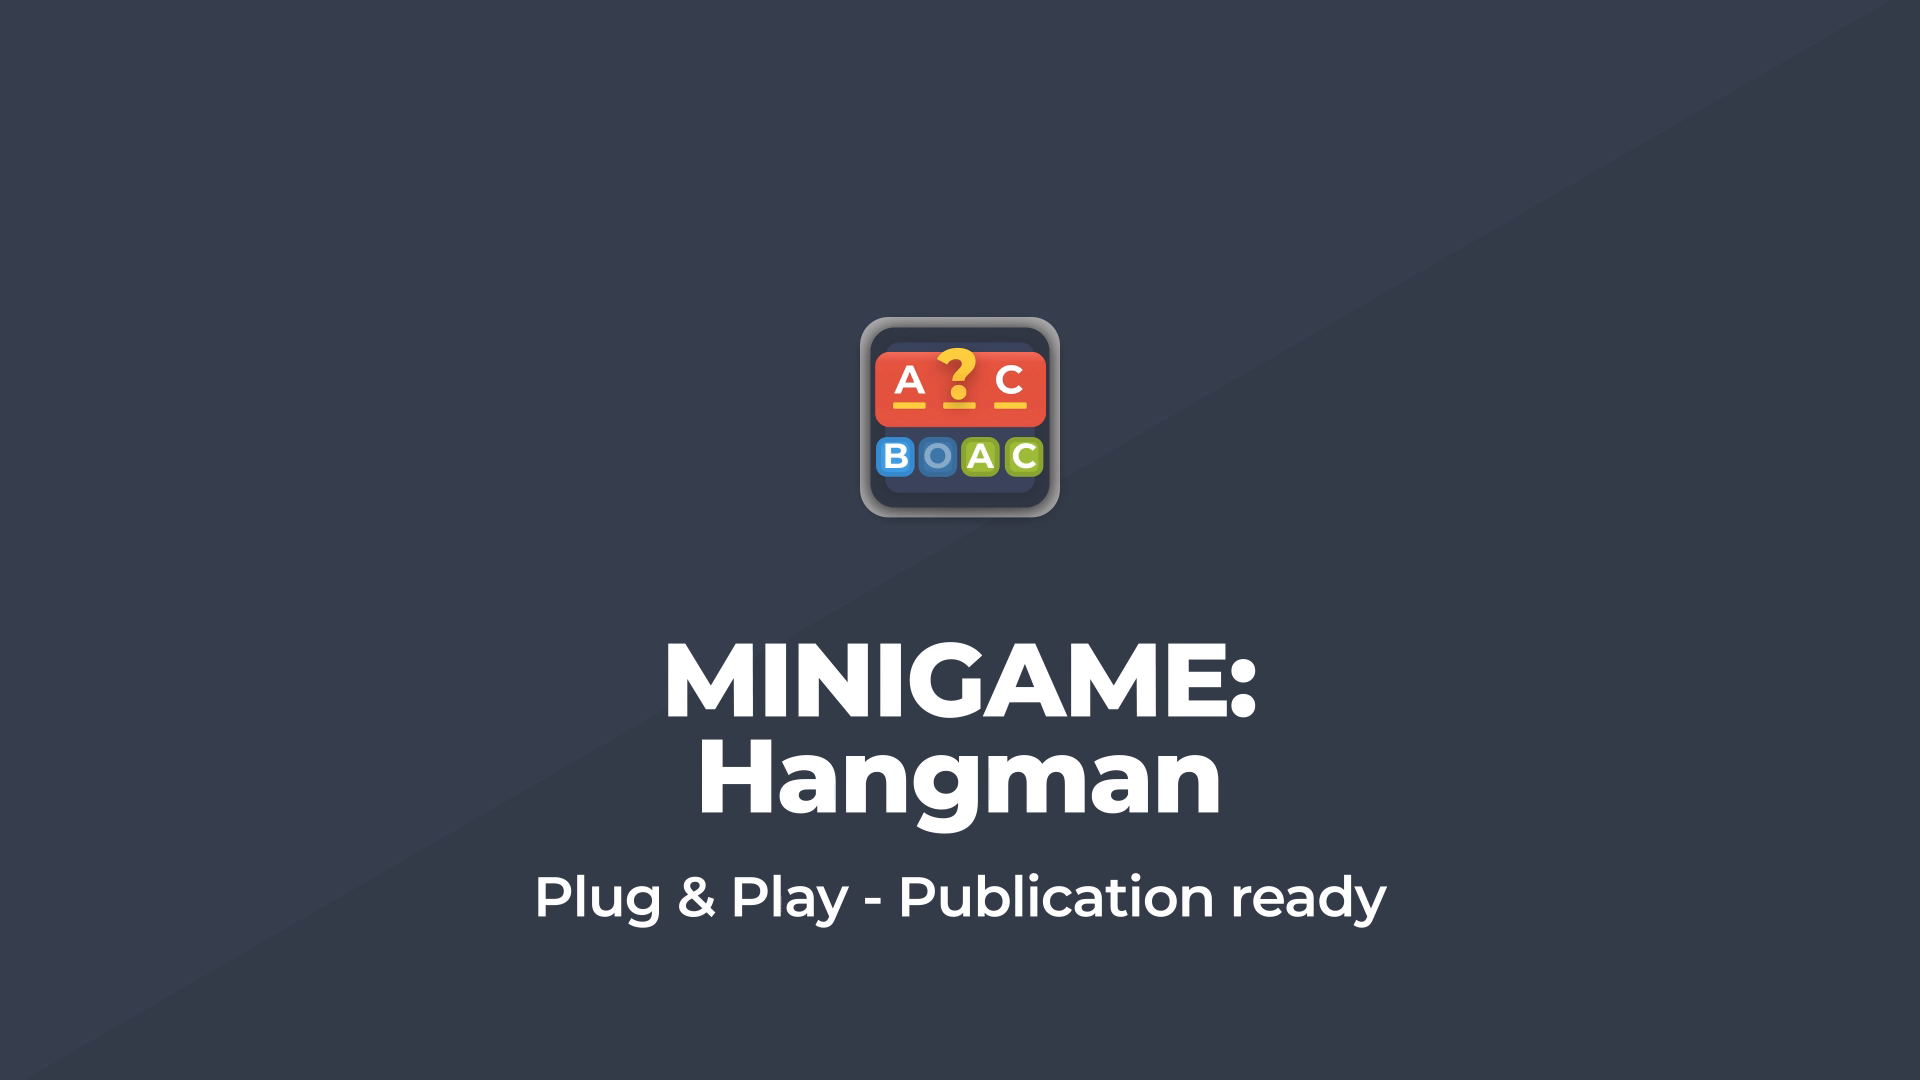 HANGMAN GAME MAKER AND PLAYER SOFTWARE The Hangman Game Maker and